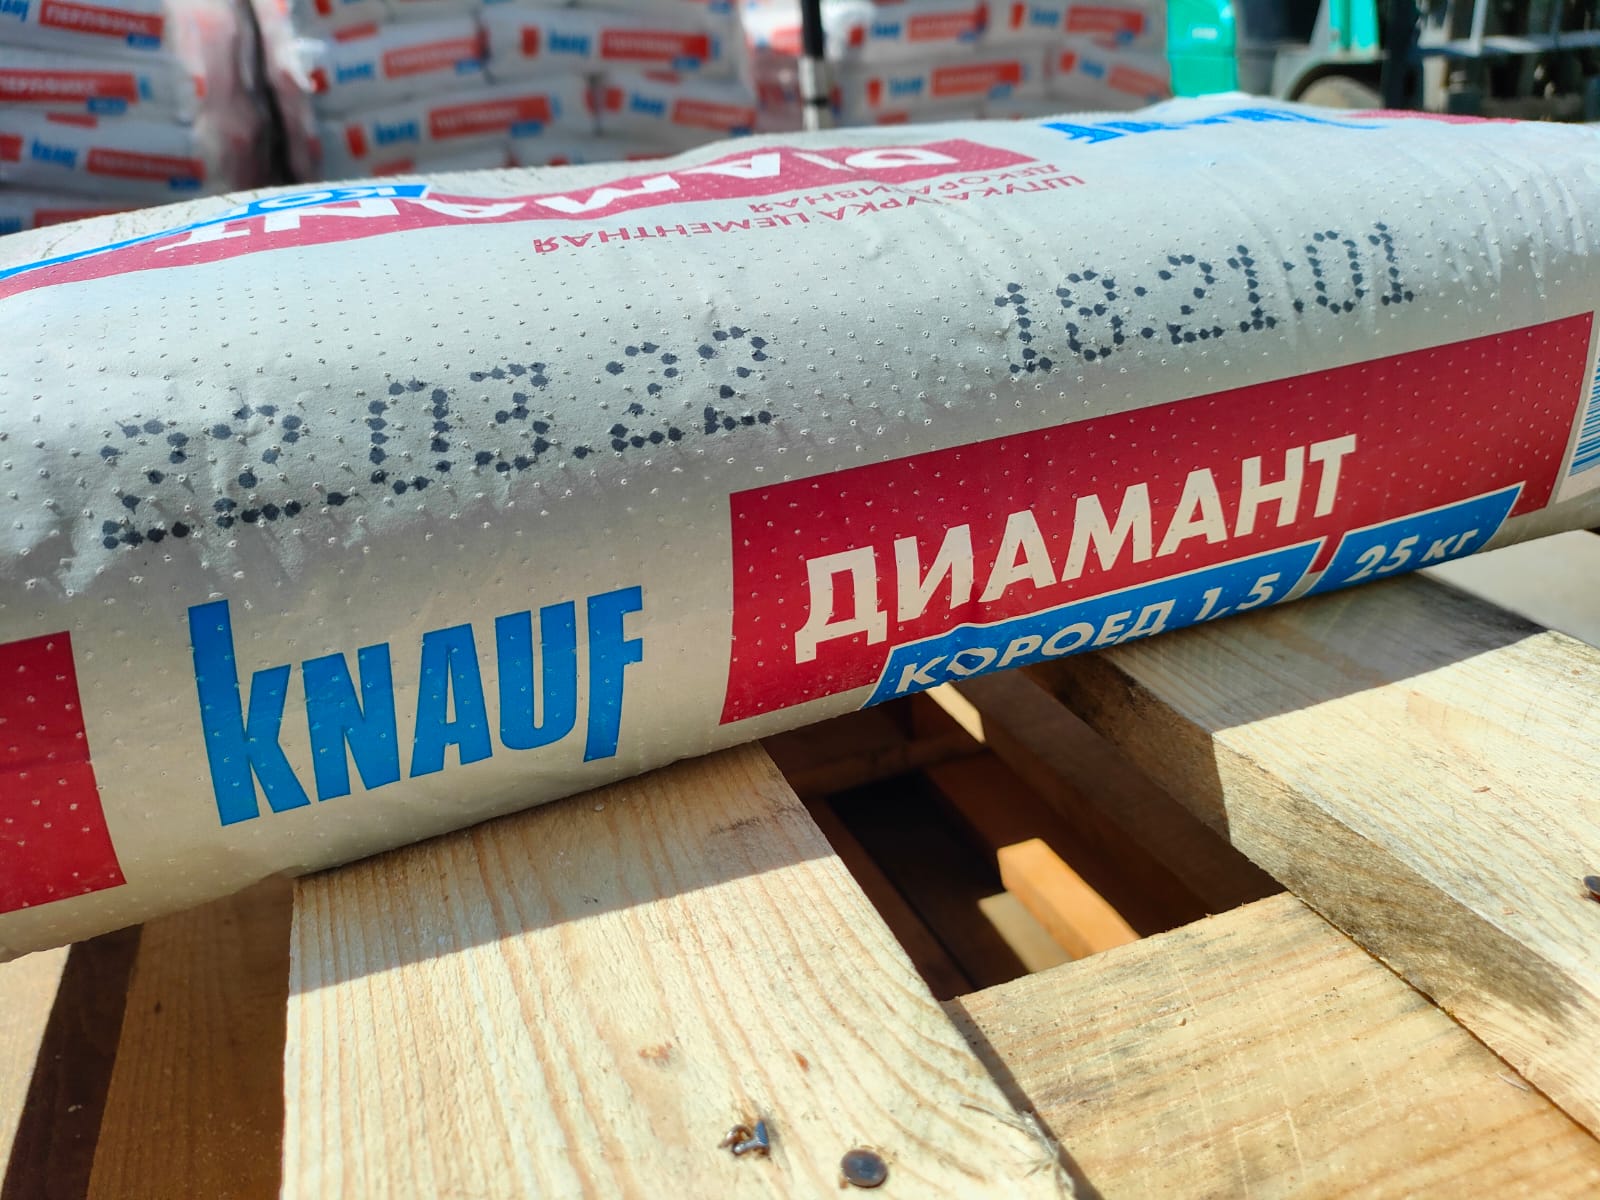 Цементная декоративная штукатурка КНАУФ-Диамант Короед 1,5 25 кг